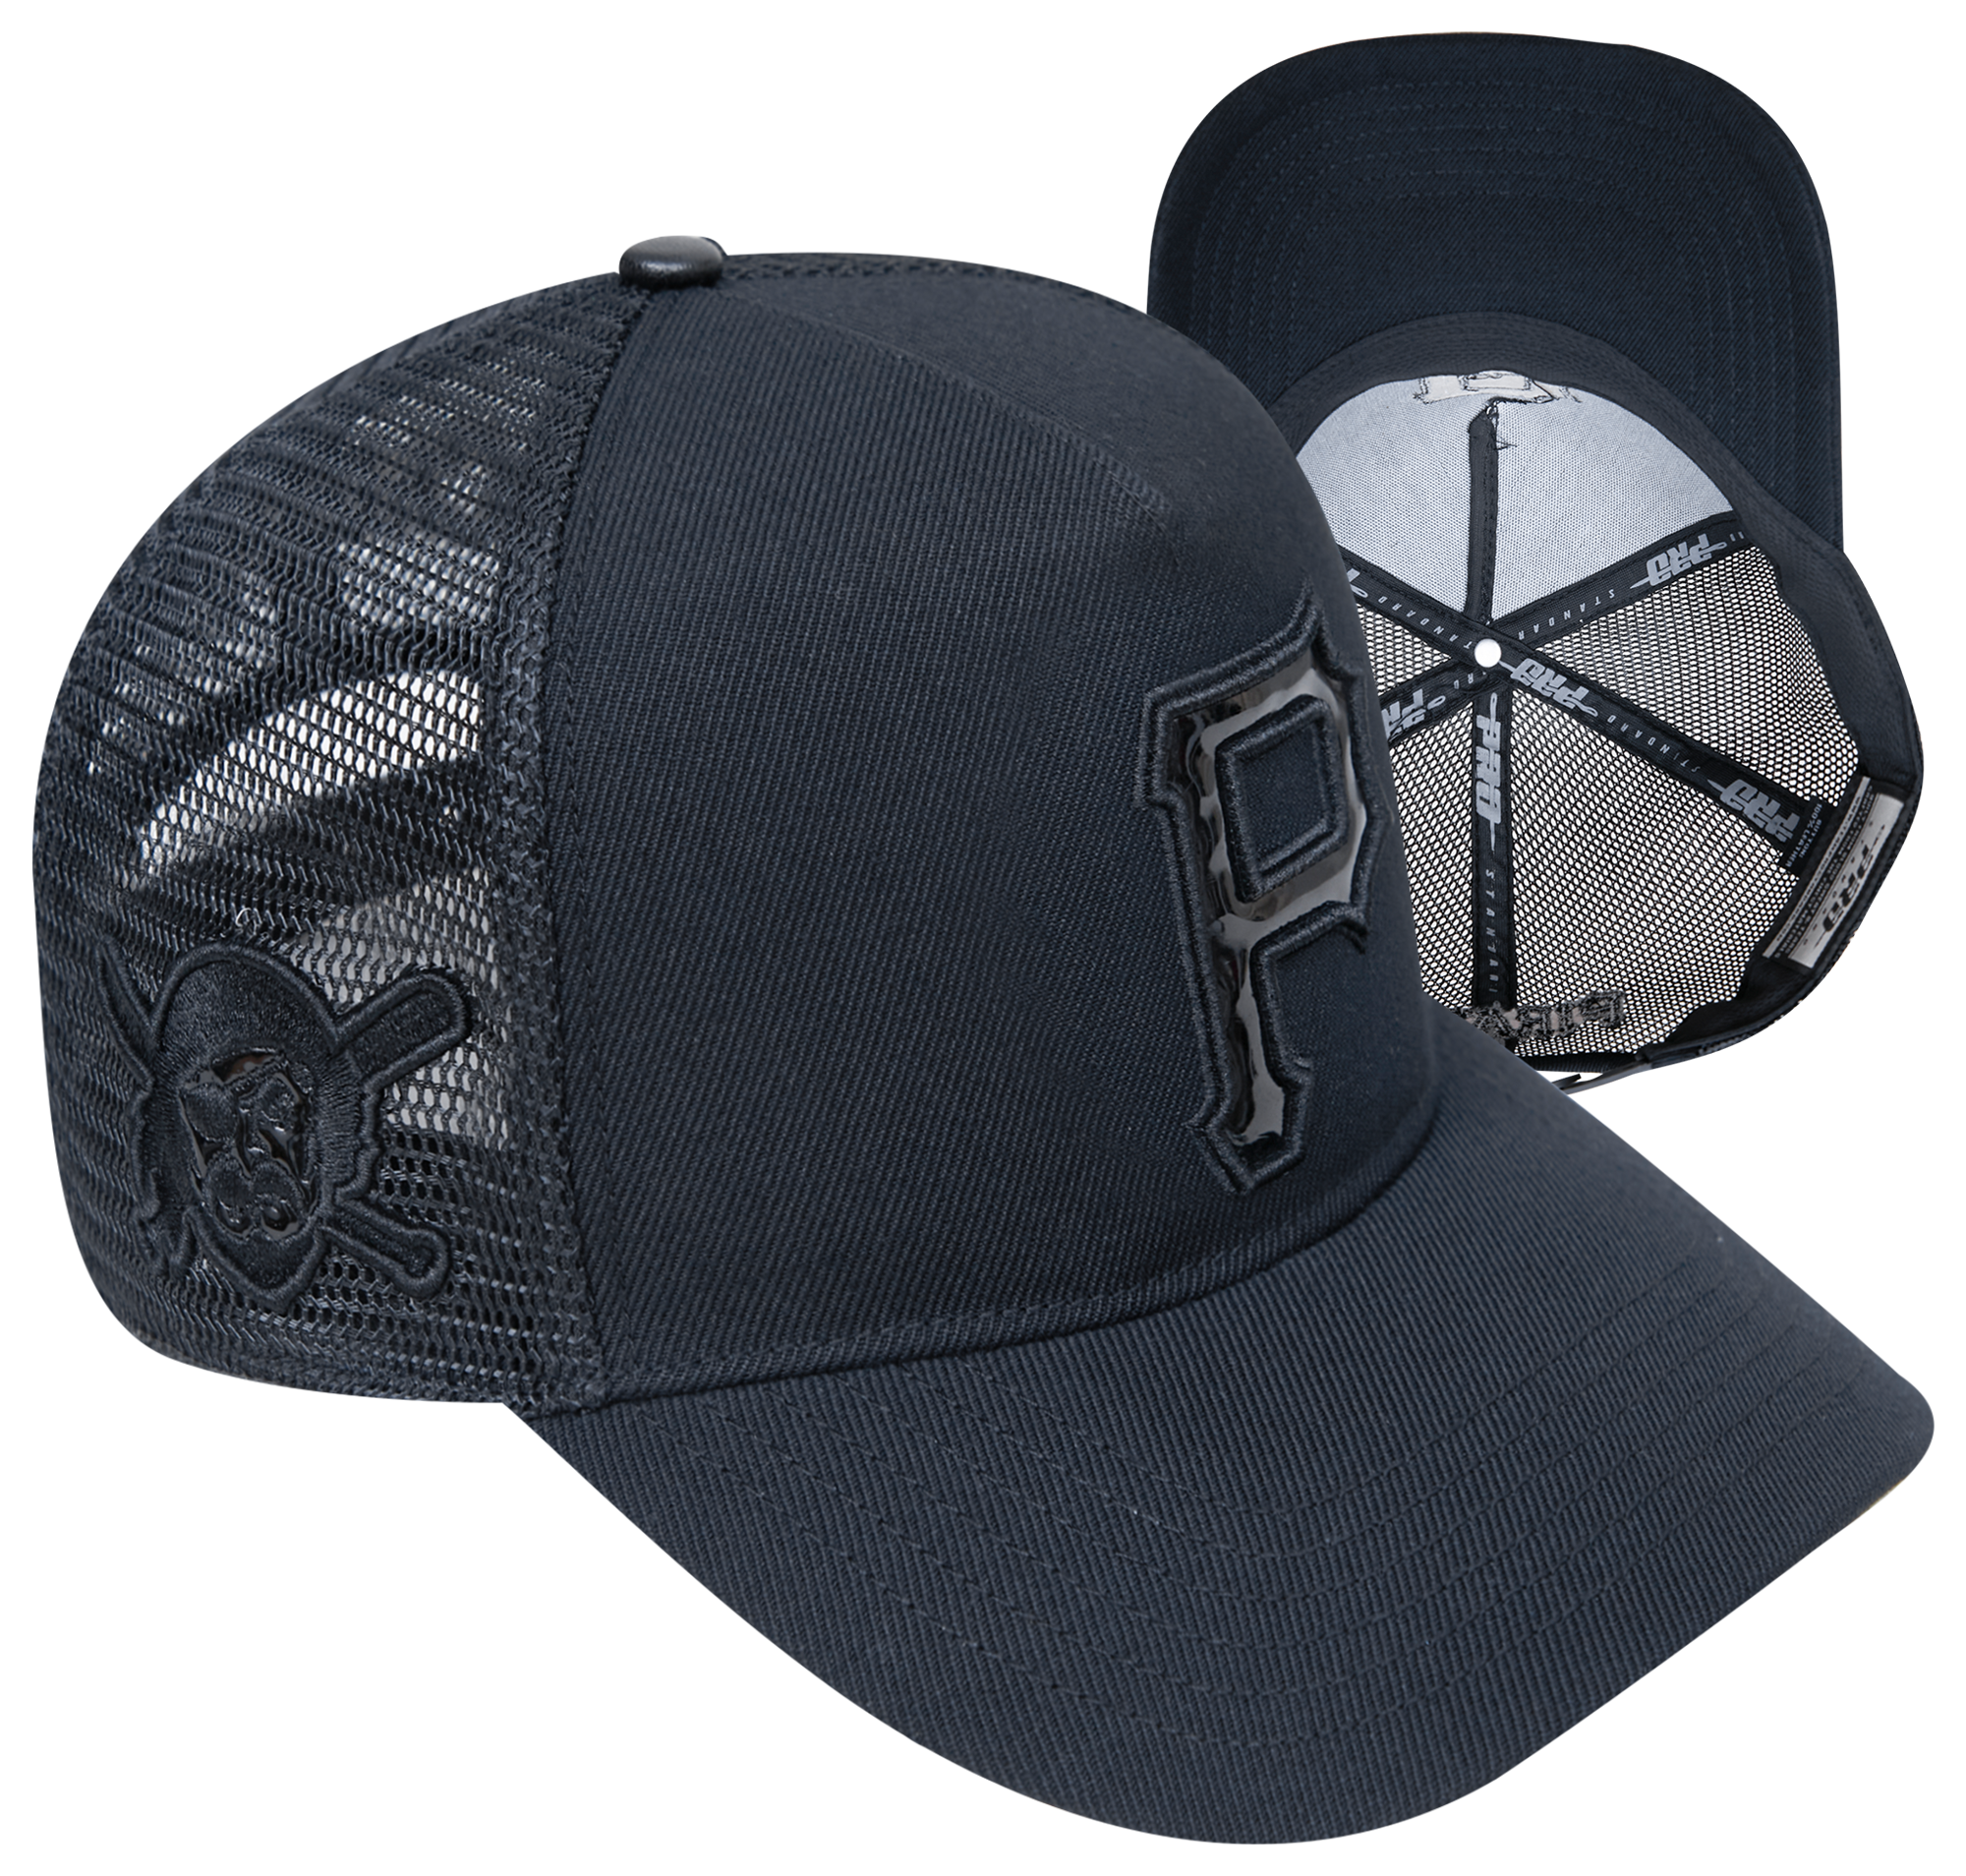 Vintage Pittsburgh Pirates MLB Mesh Trucker SnapBack Cap Hat True